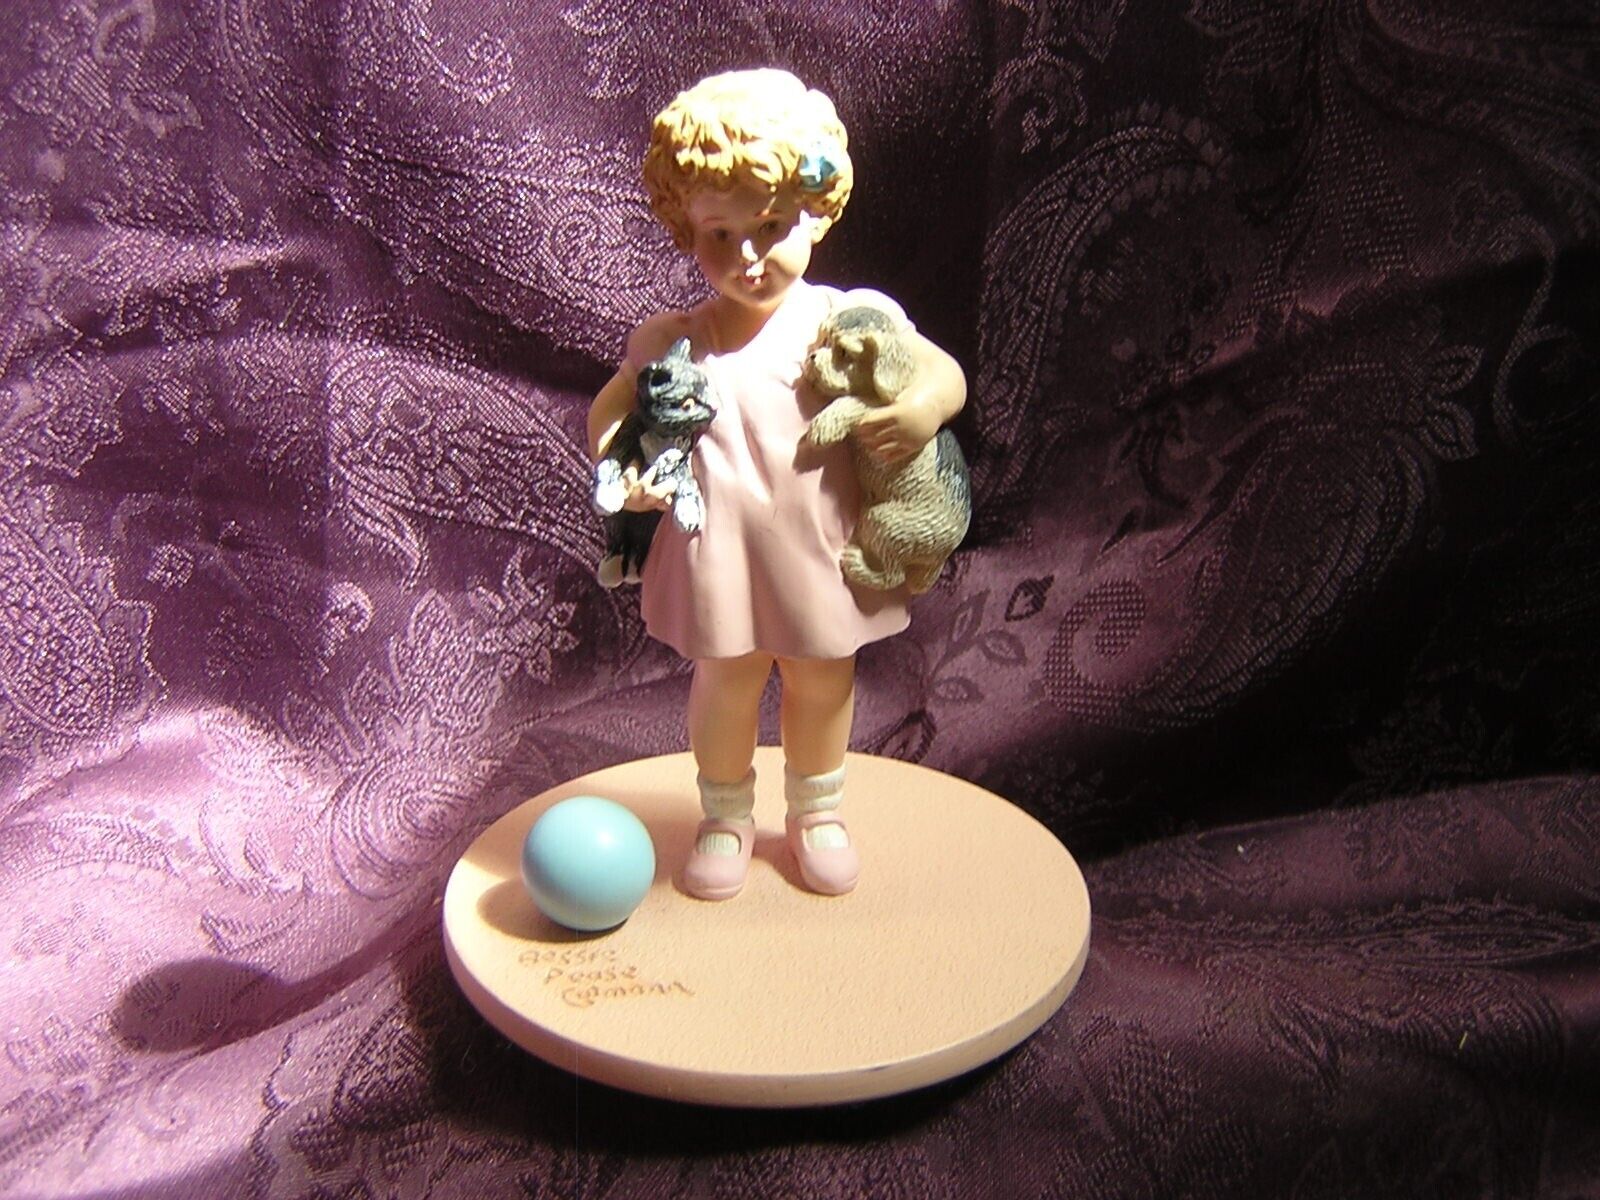 Bessie Pease Gutmann Danbury Mint figurine 1992 friendly enemies